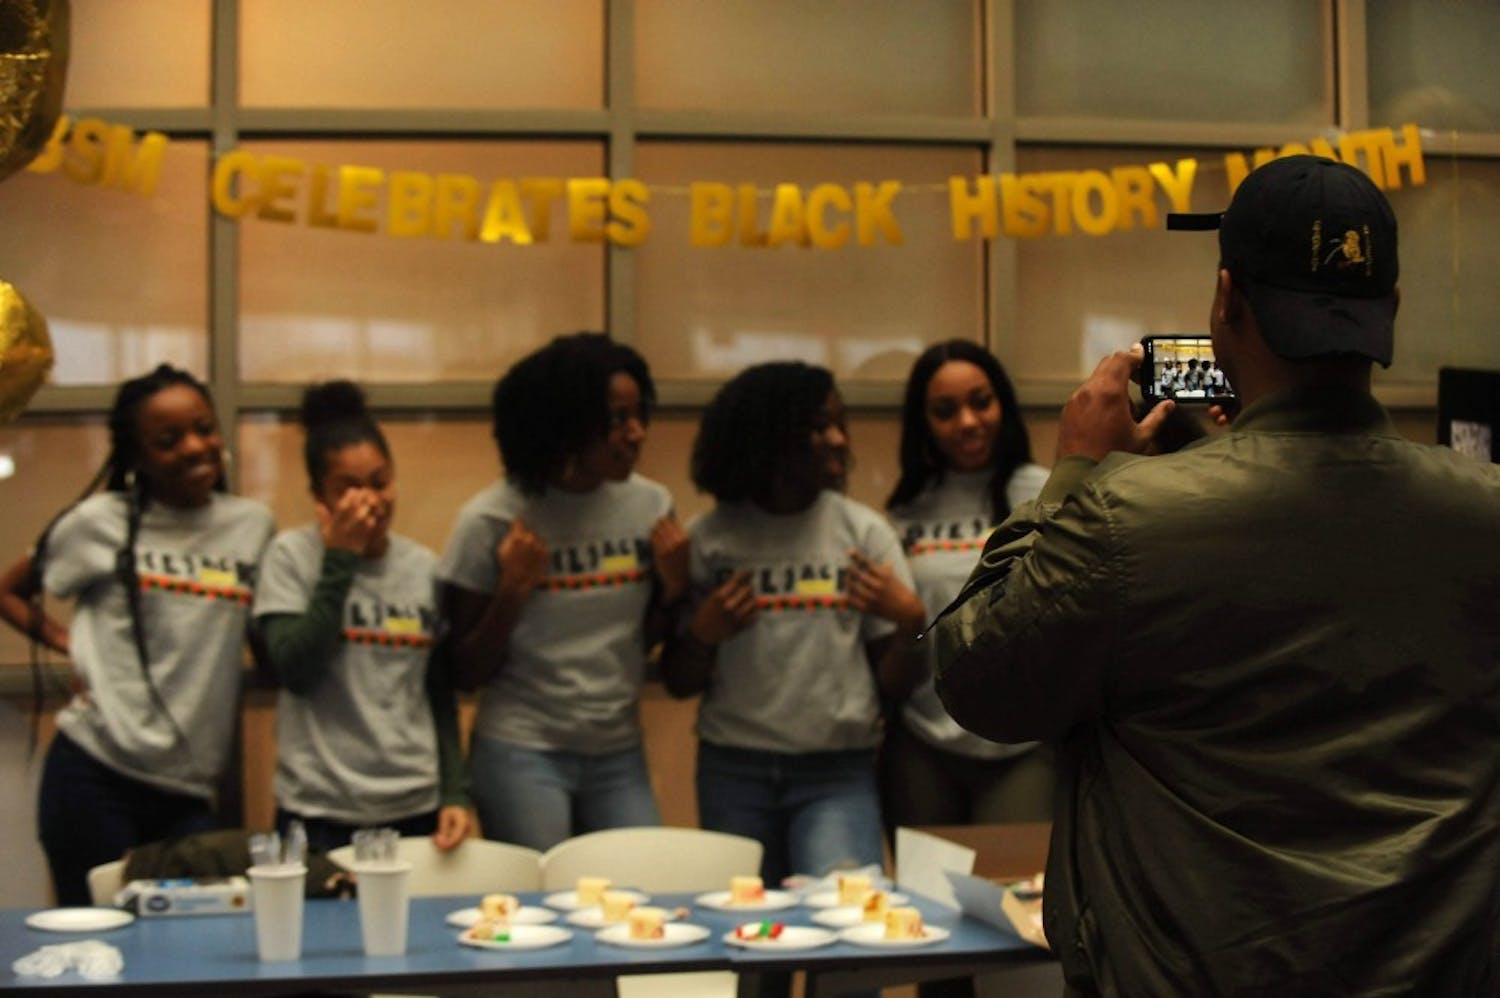 BSM Black History Month